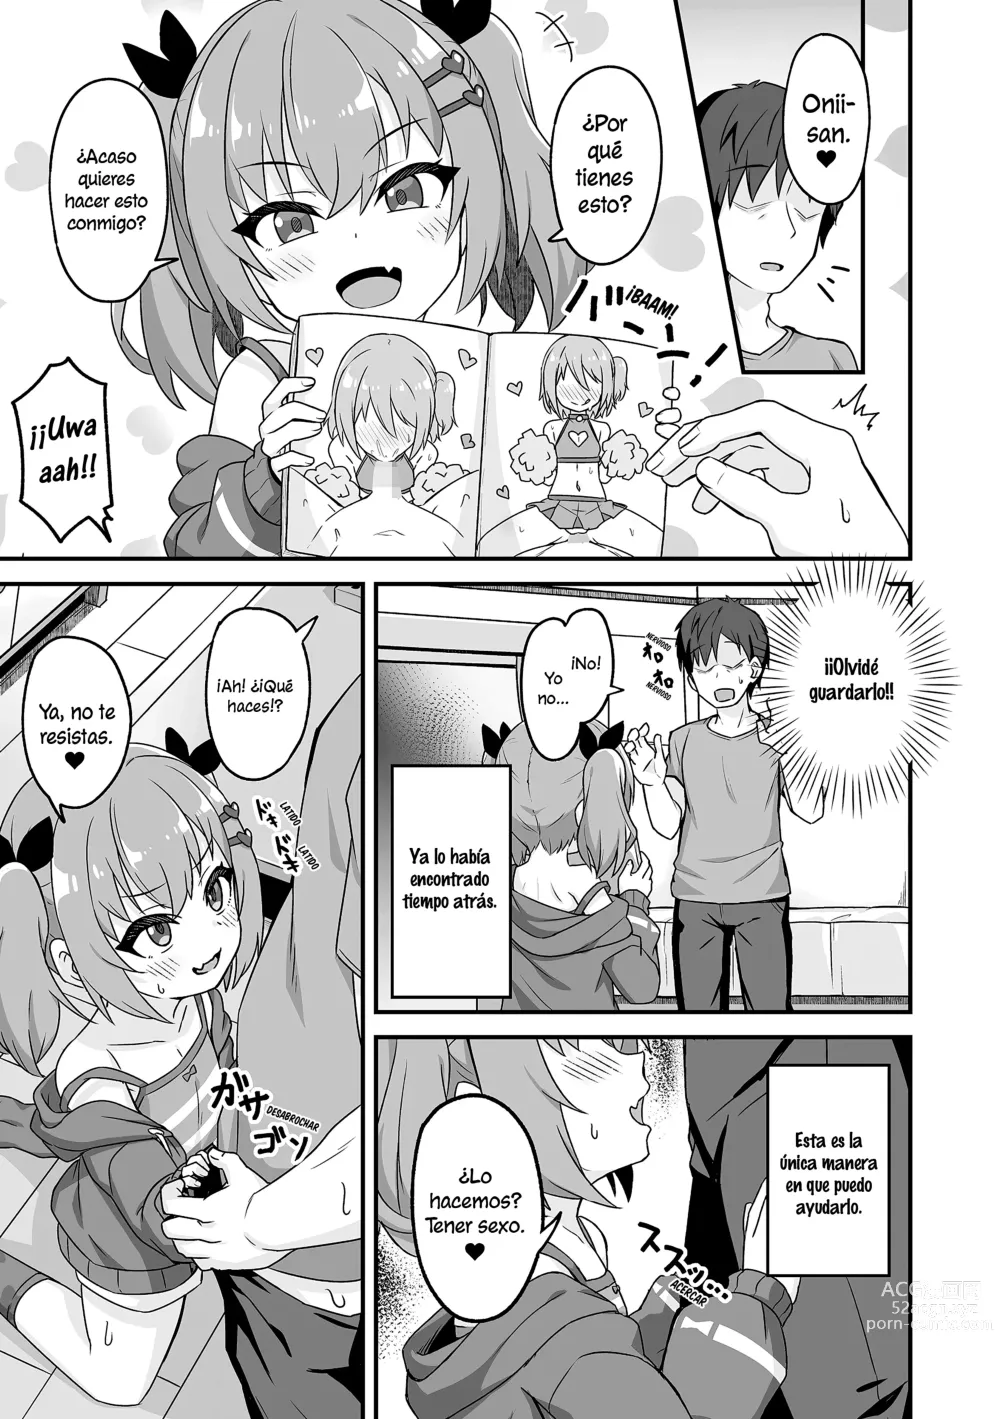 Page 3 of manga Interdependencia sexual con una niña fugitiva